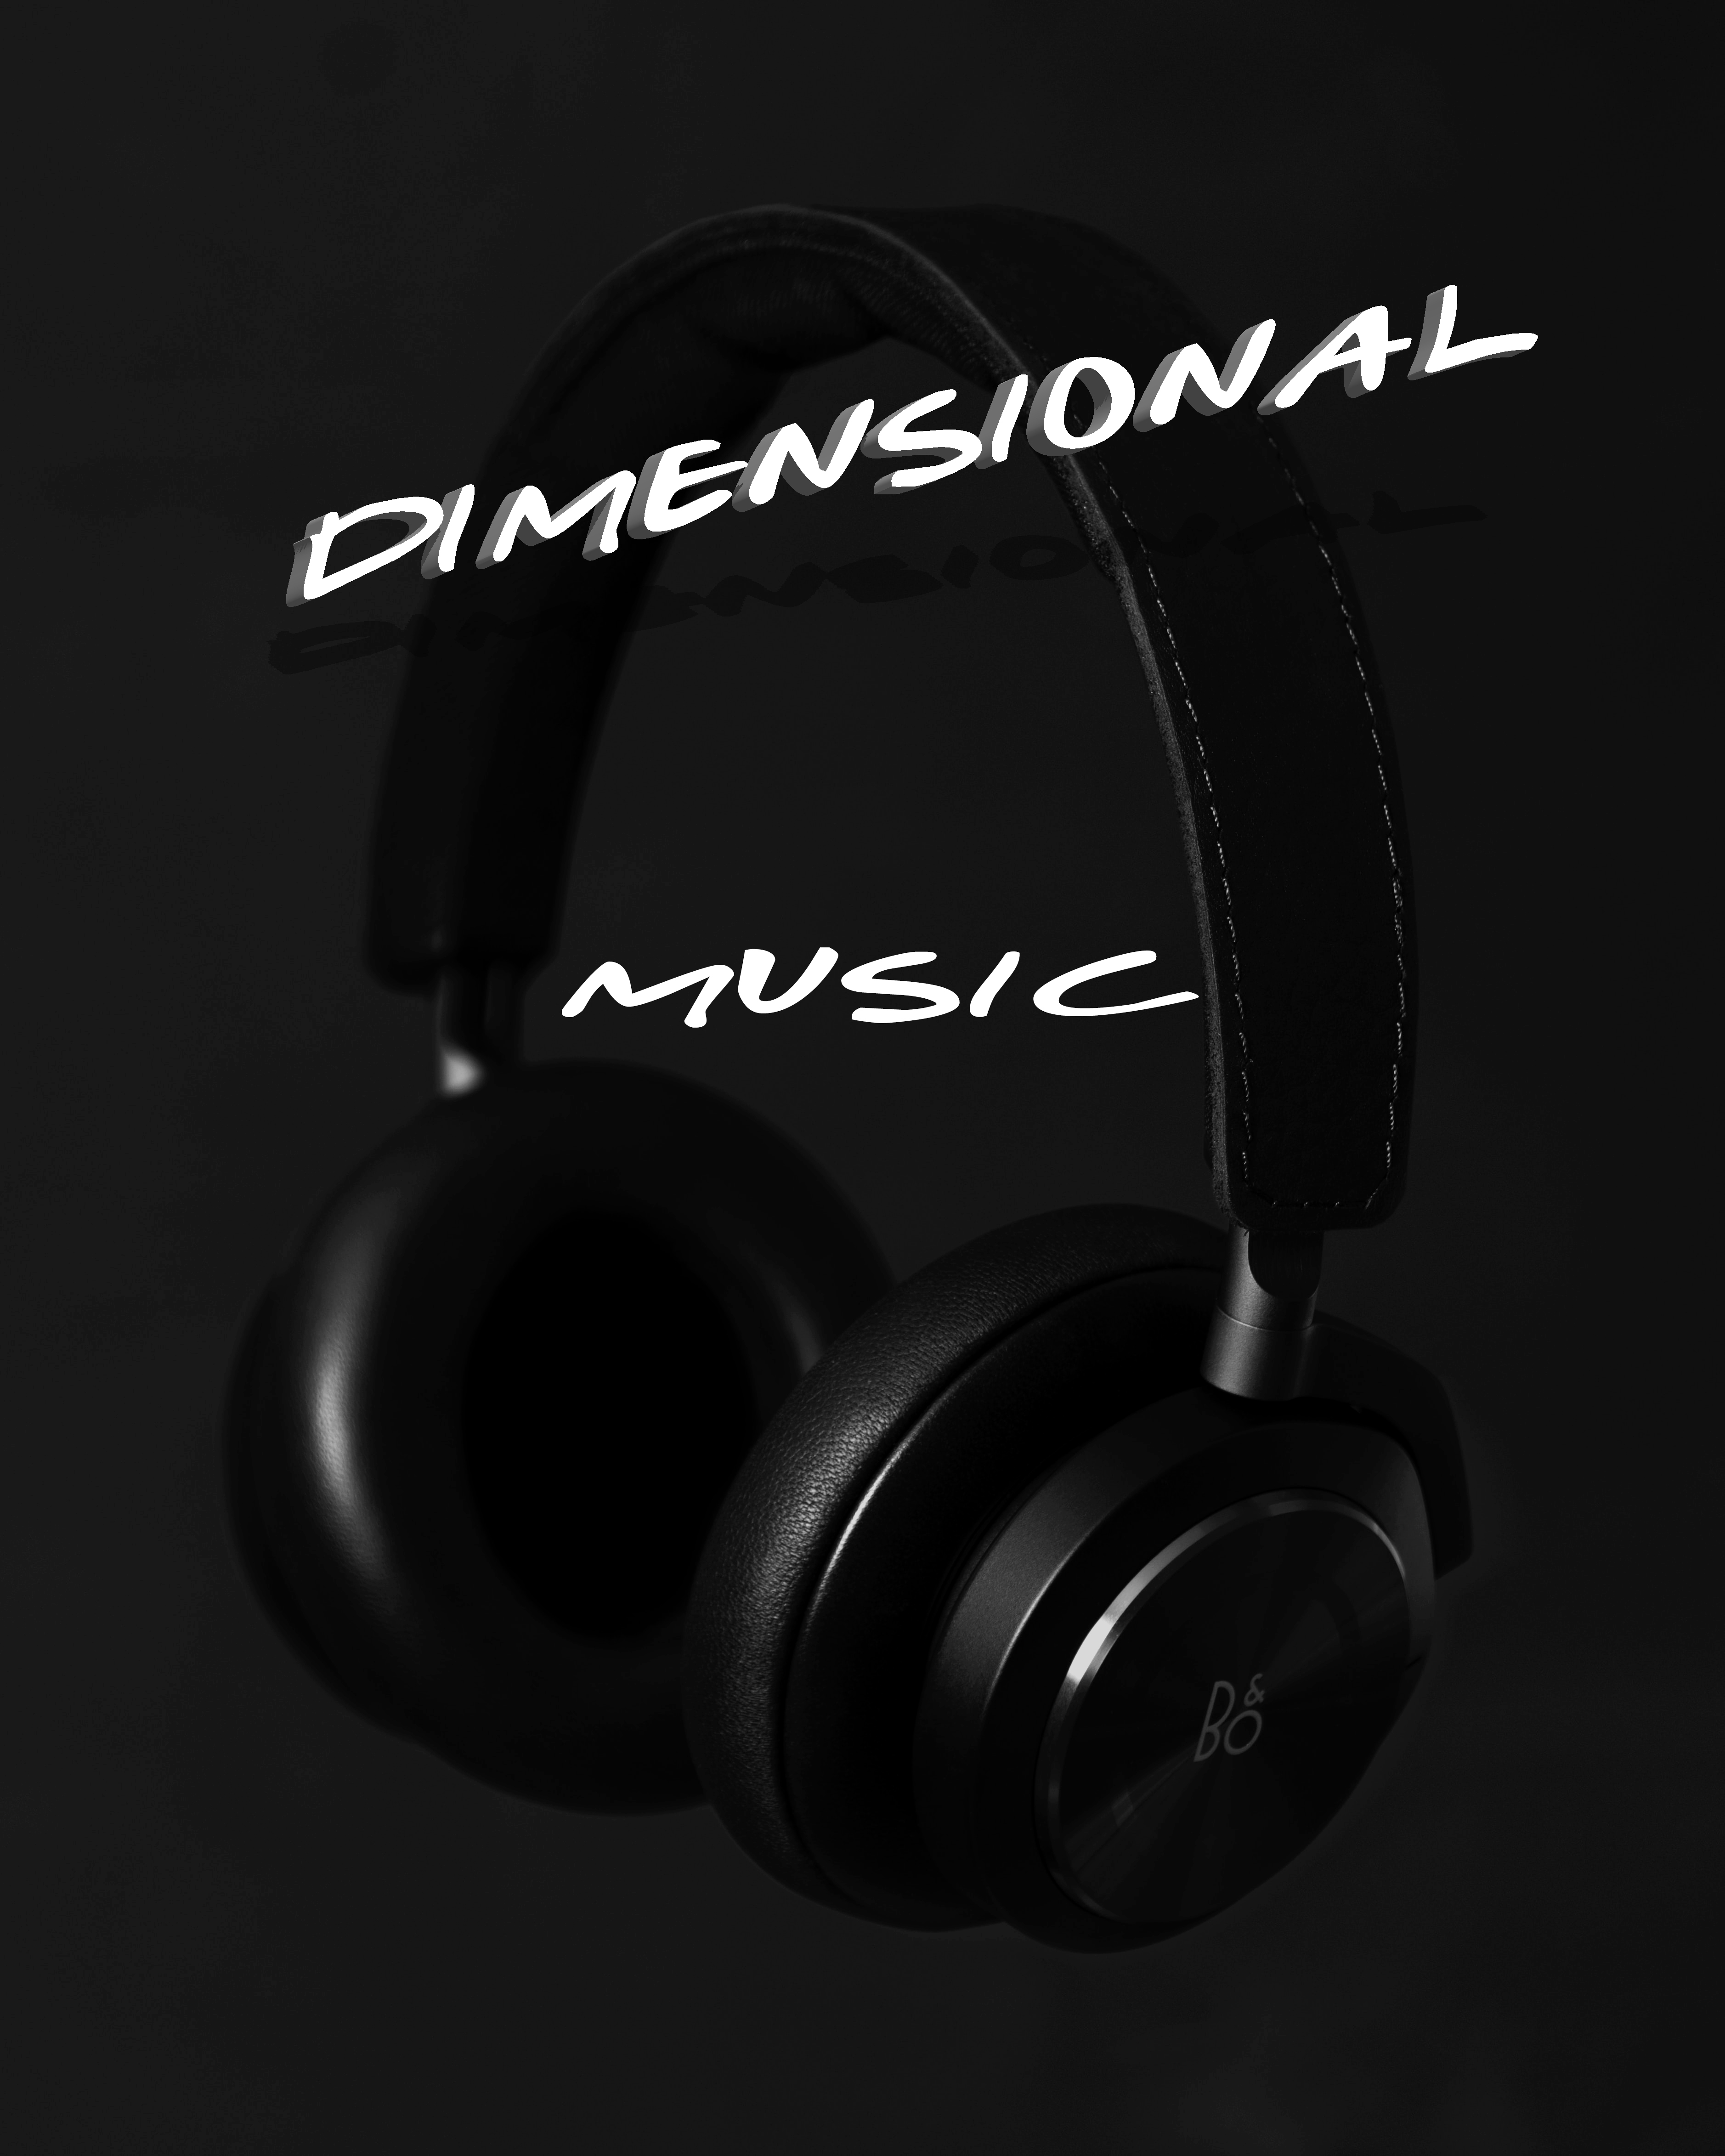 Dimensional Music